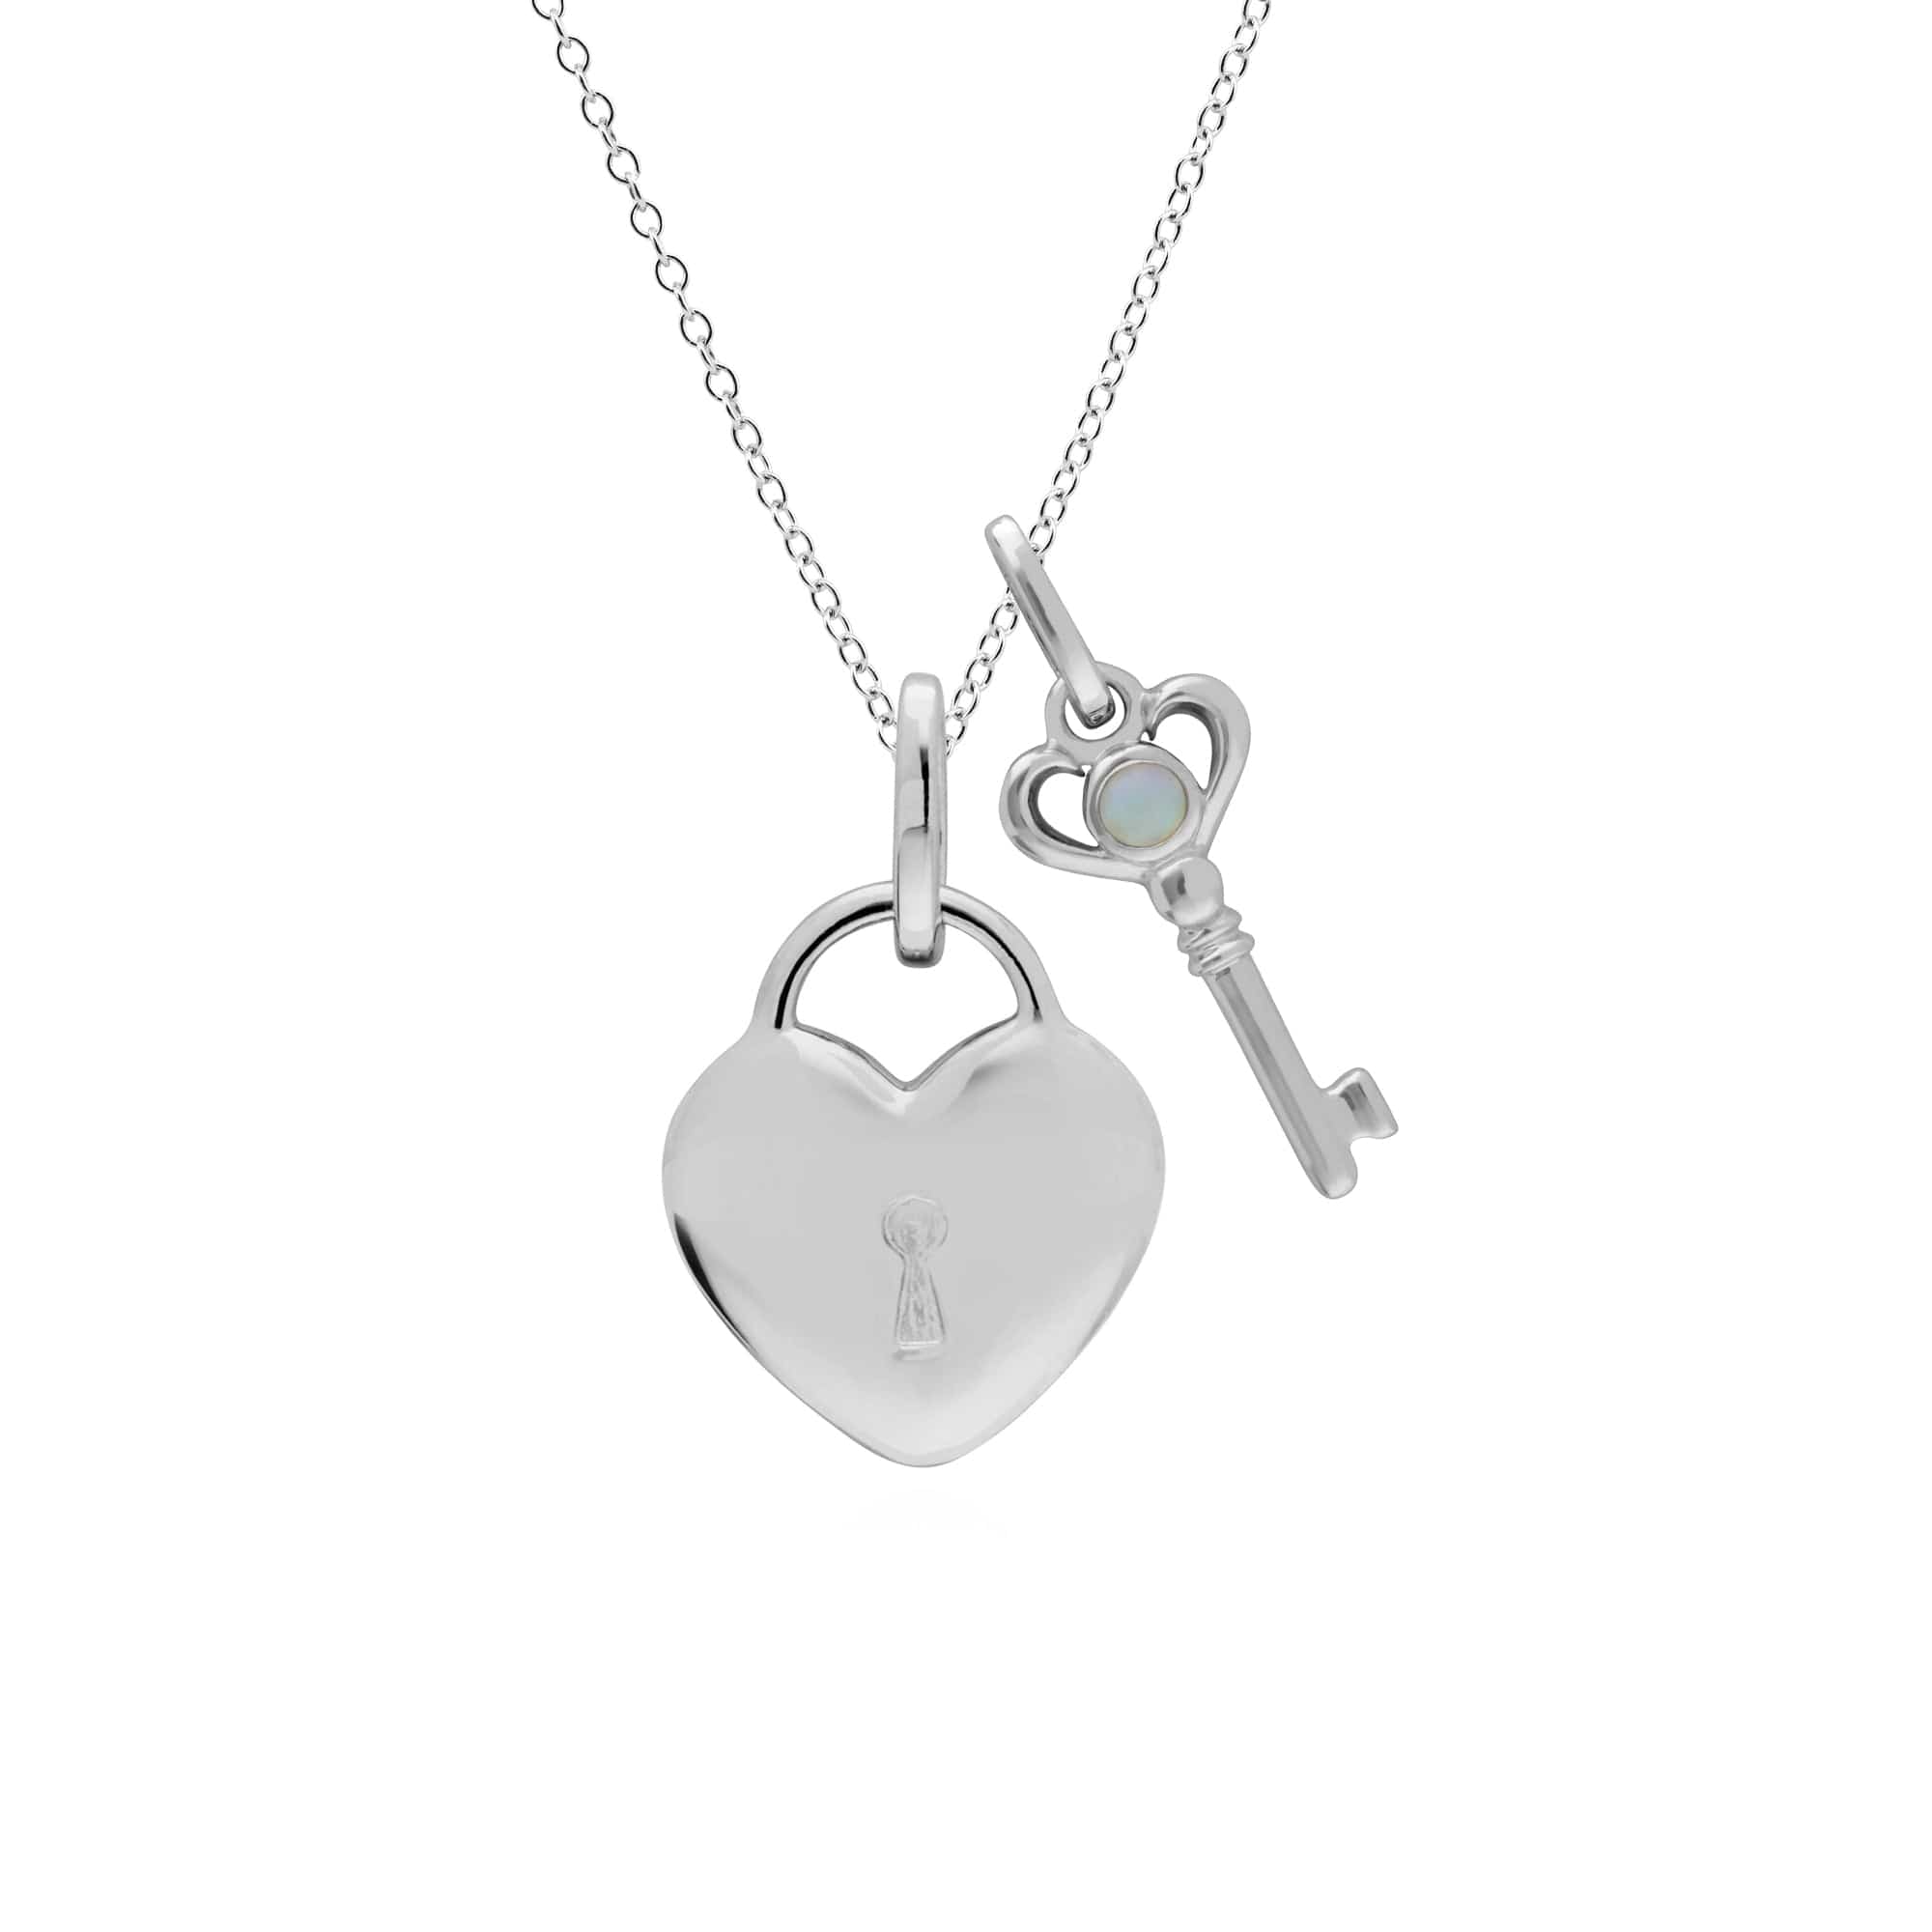 270P027503925-270P027001925 Classic Heart Lock Pendant & Opal Key Charm in 925 Sterling Silver 1